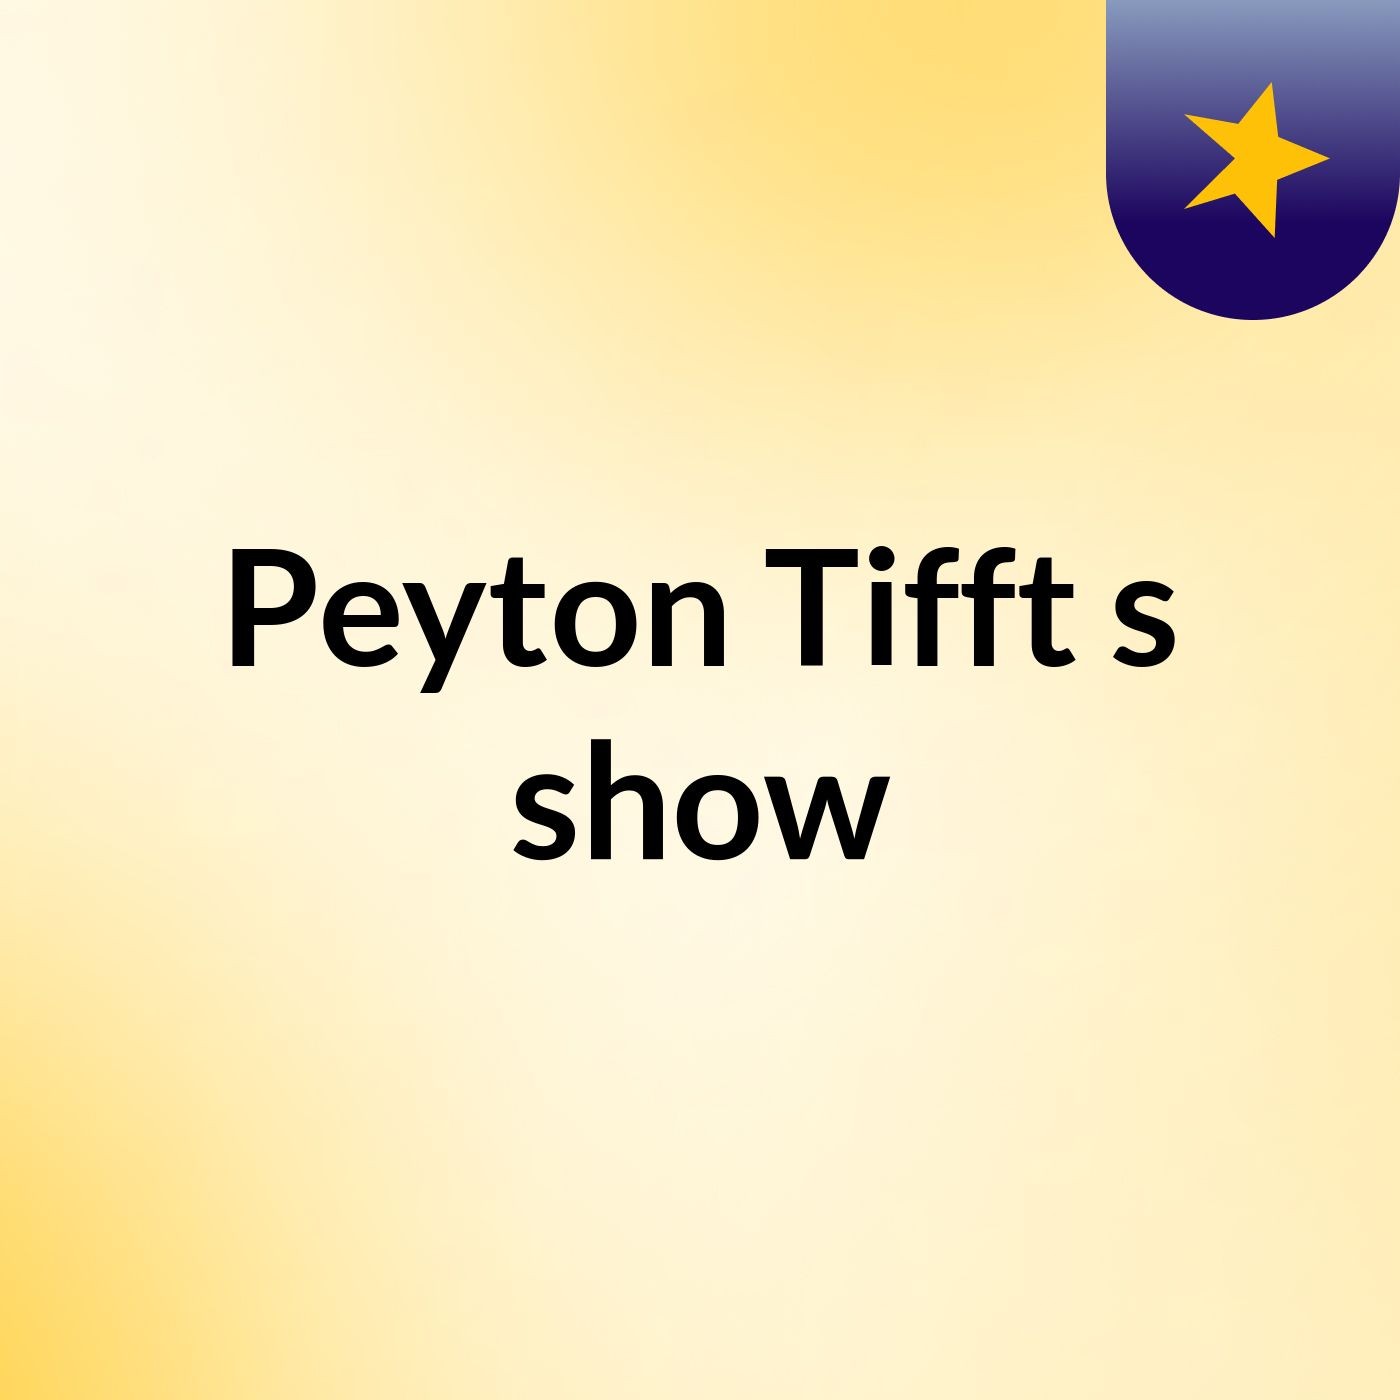 Peyton Tifft's show